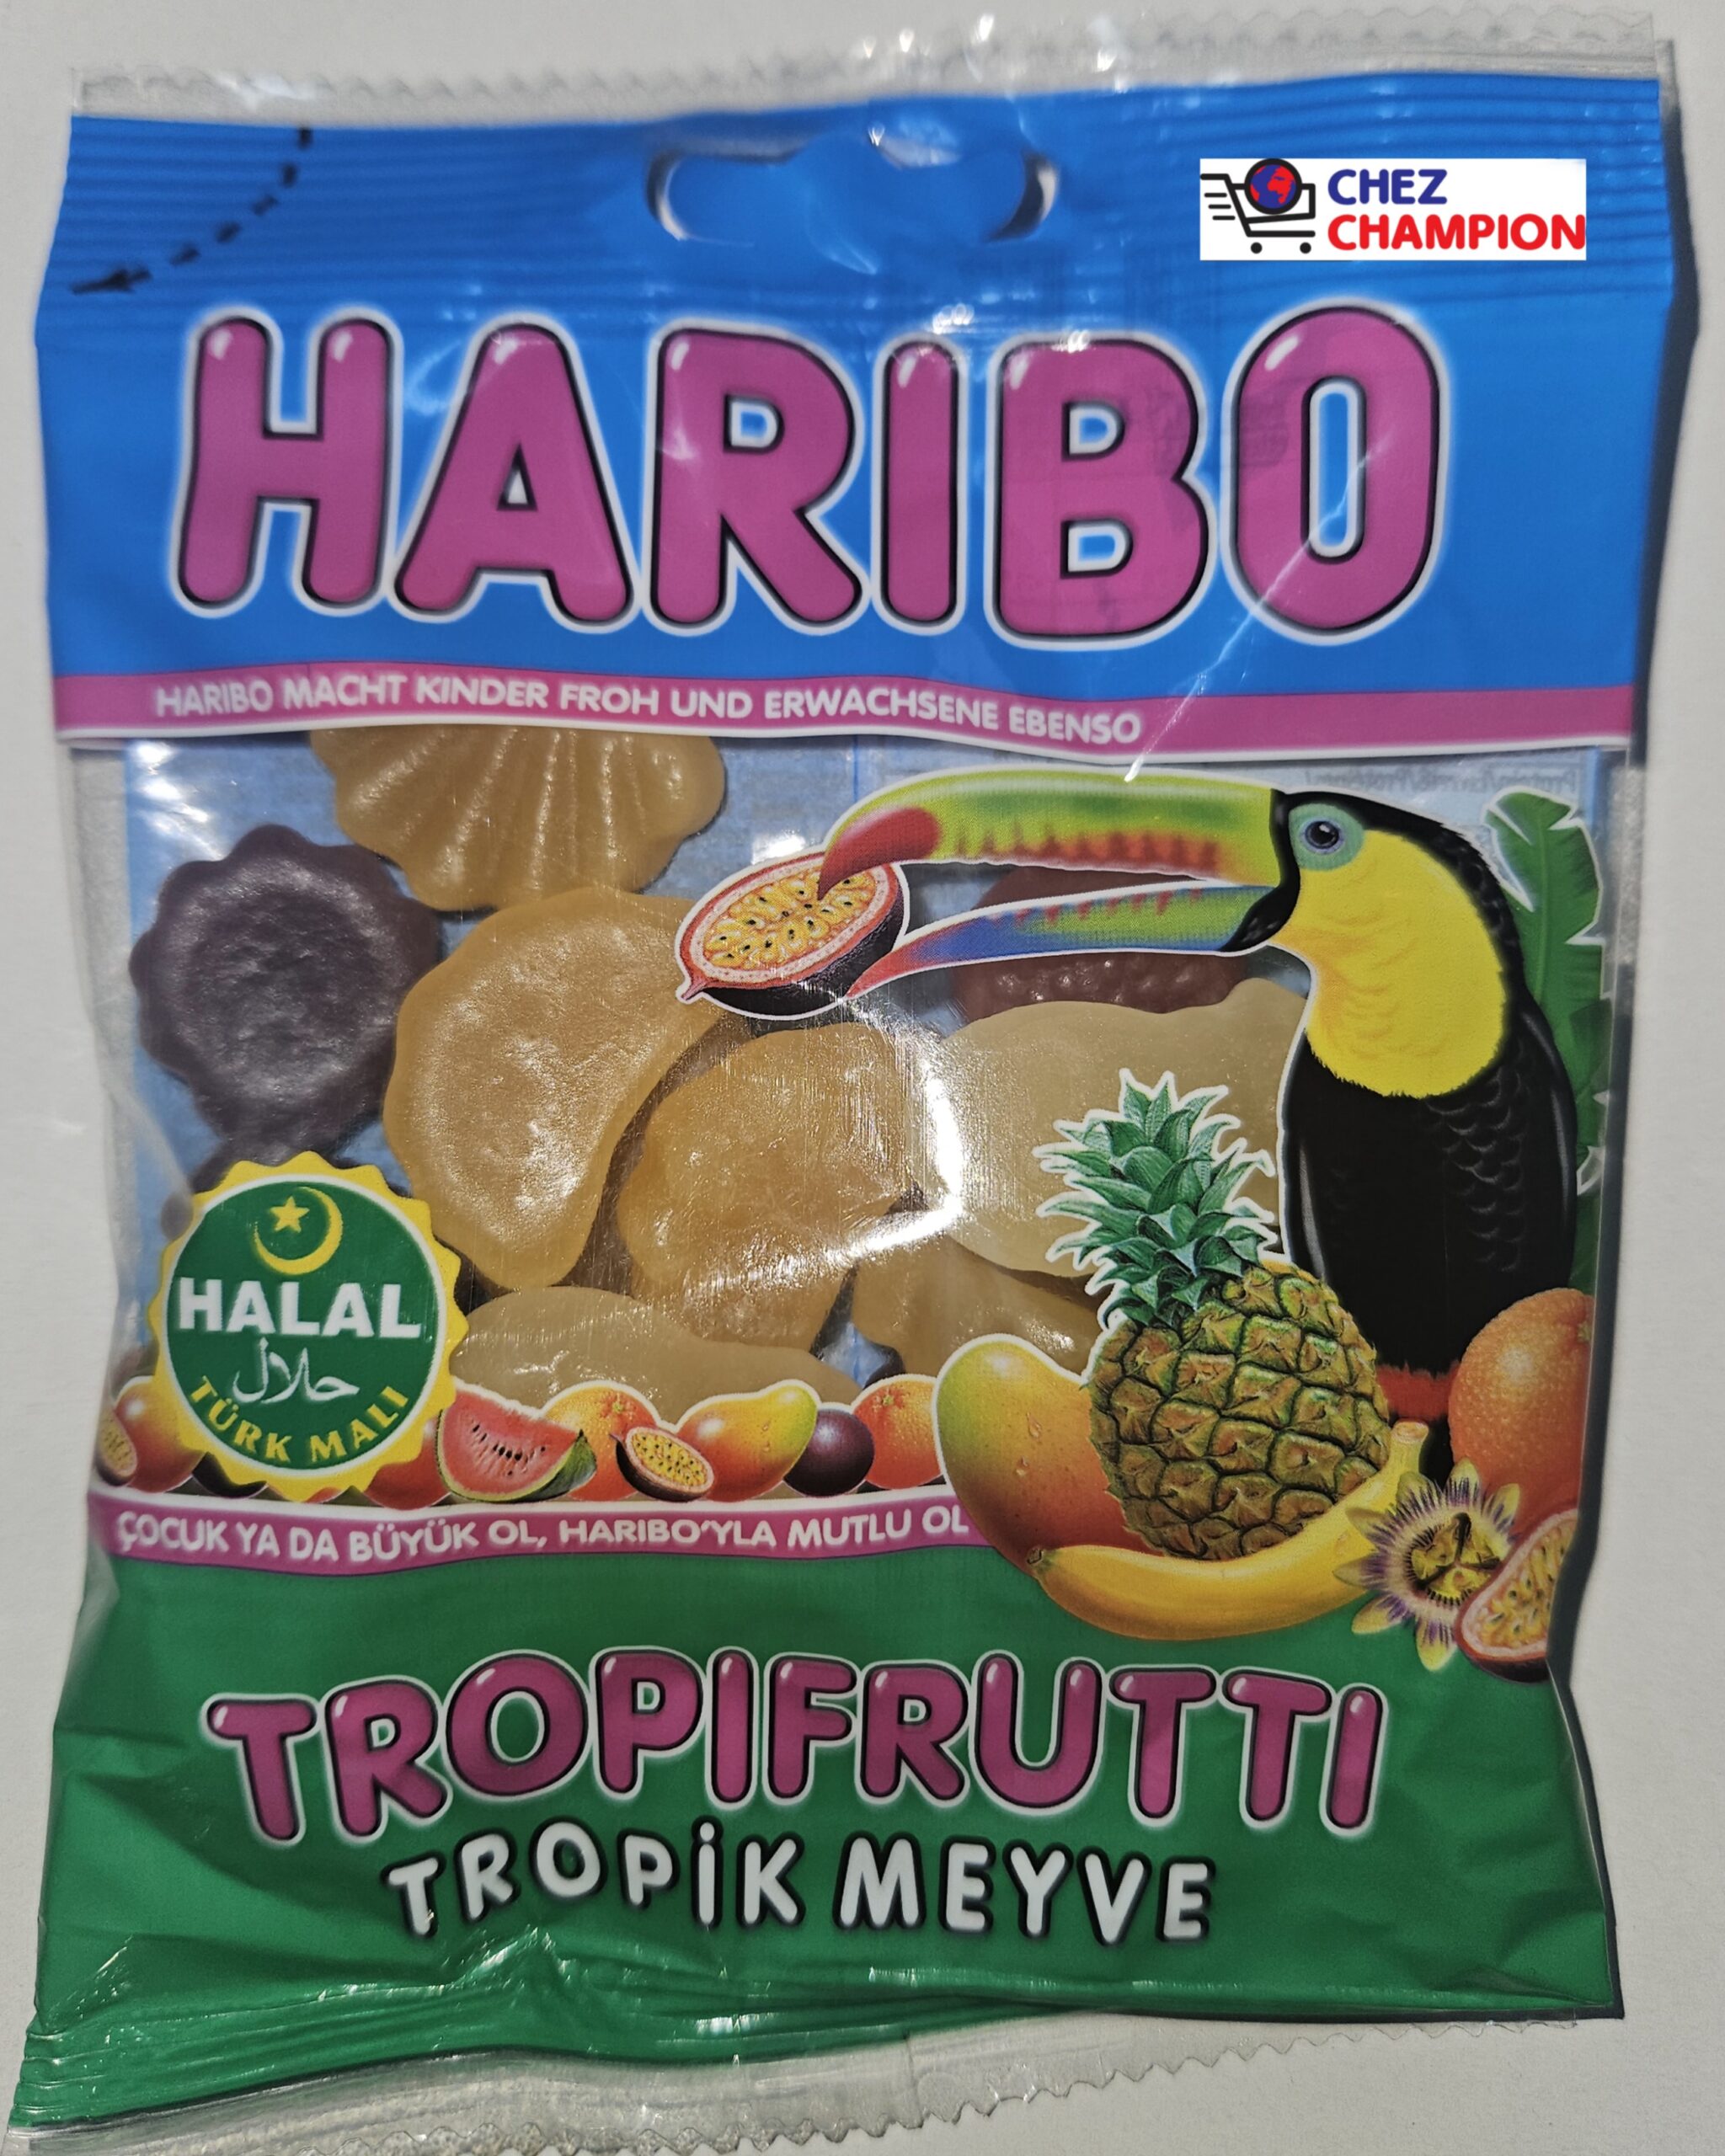 Haribo tropifrutti halal – bonbons fruits tropicaux – 100g